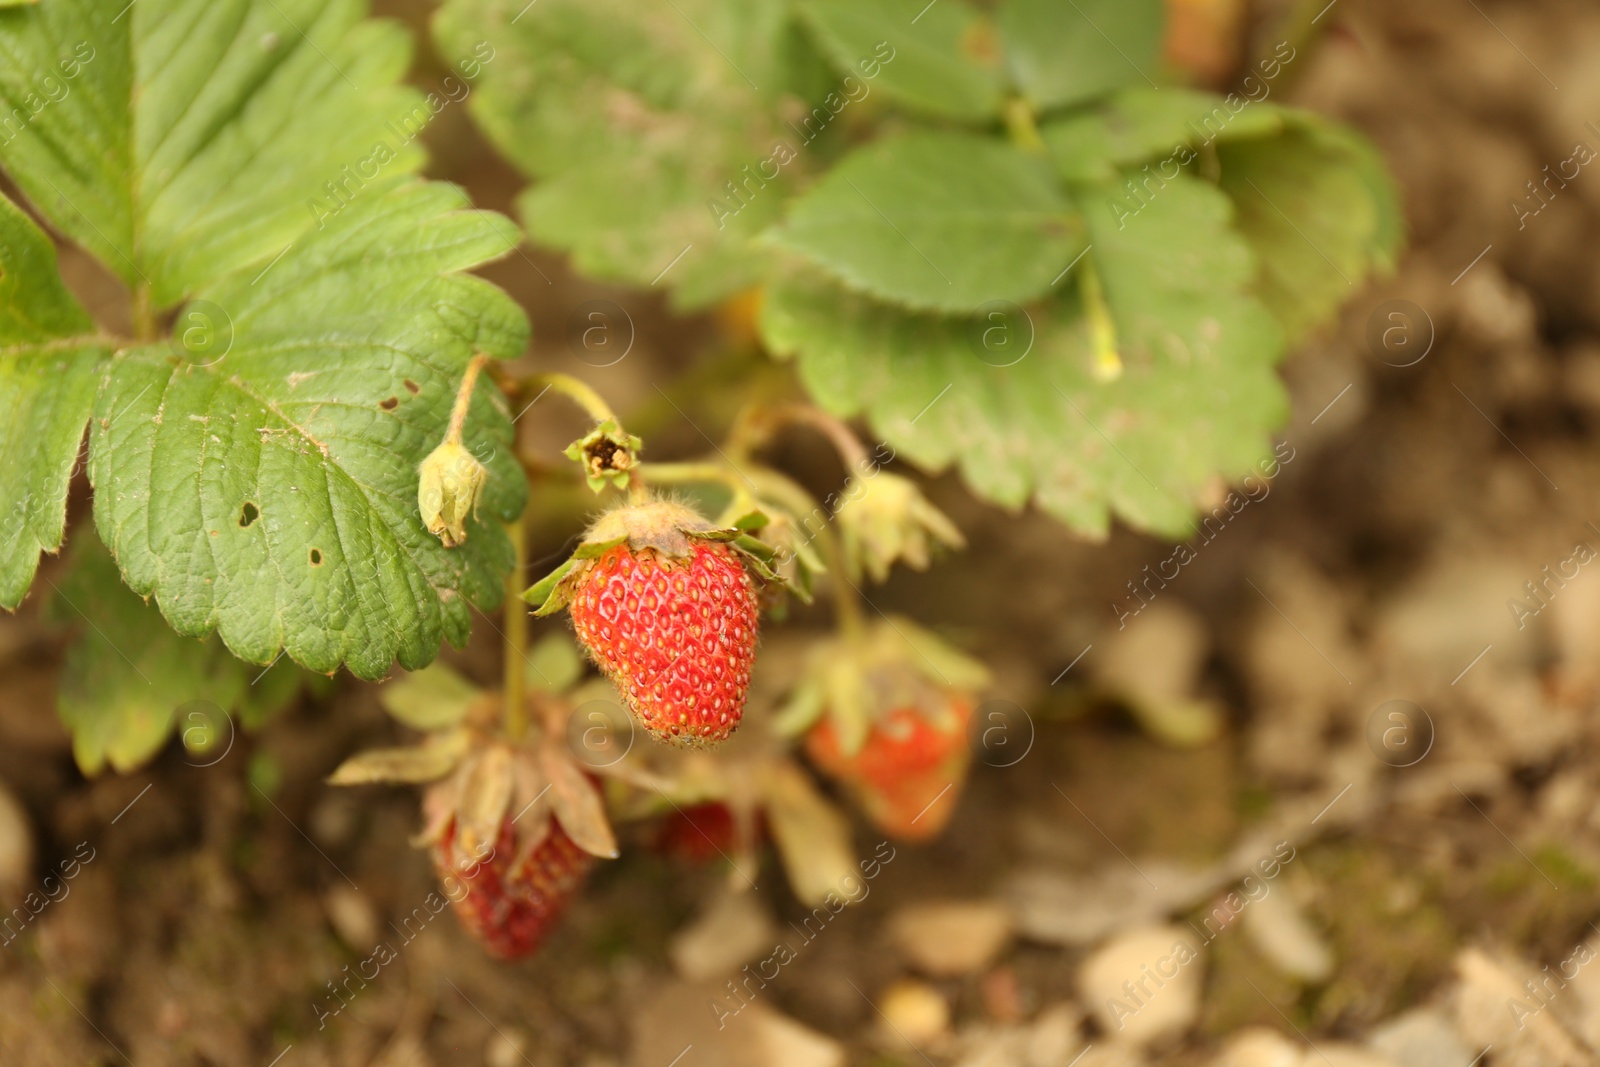 Photo of Small unripe strawberries growing outdoors, closeup. Seasonal berries